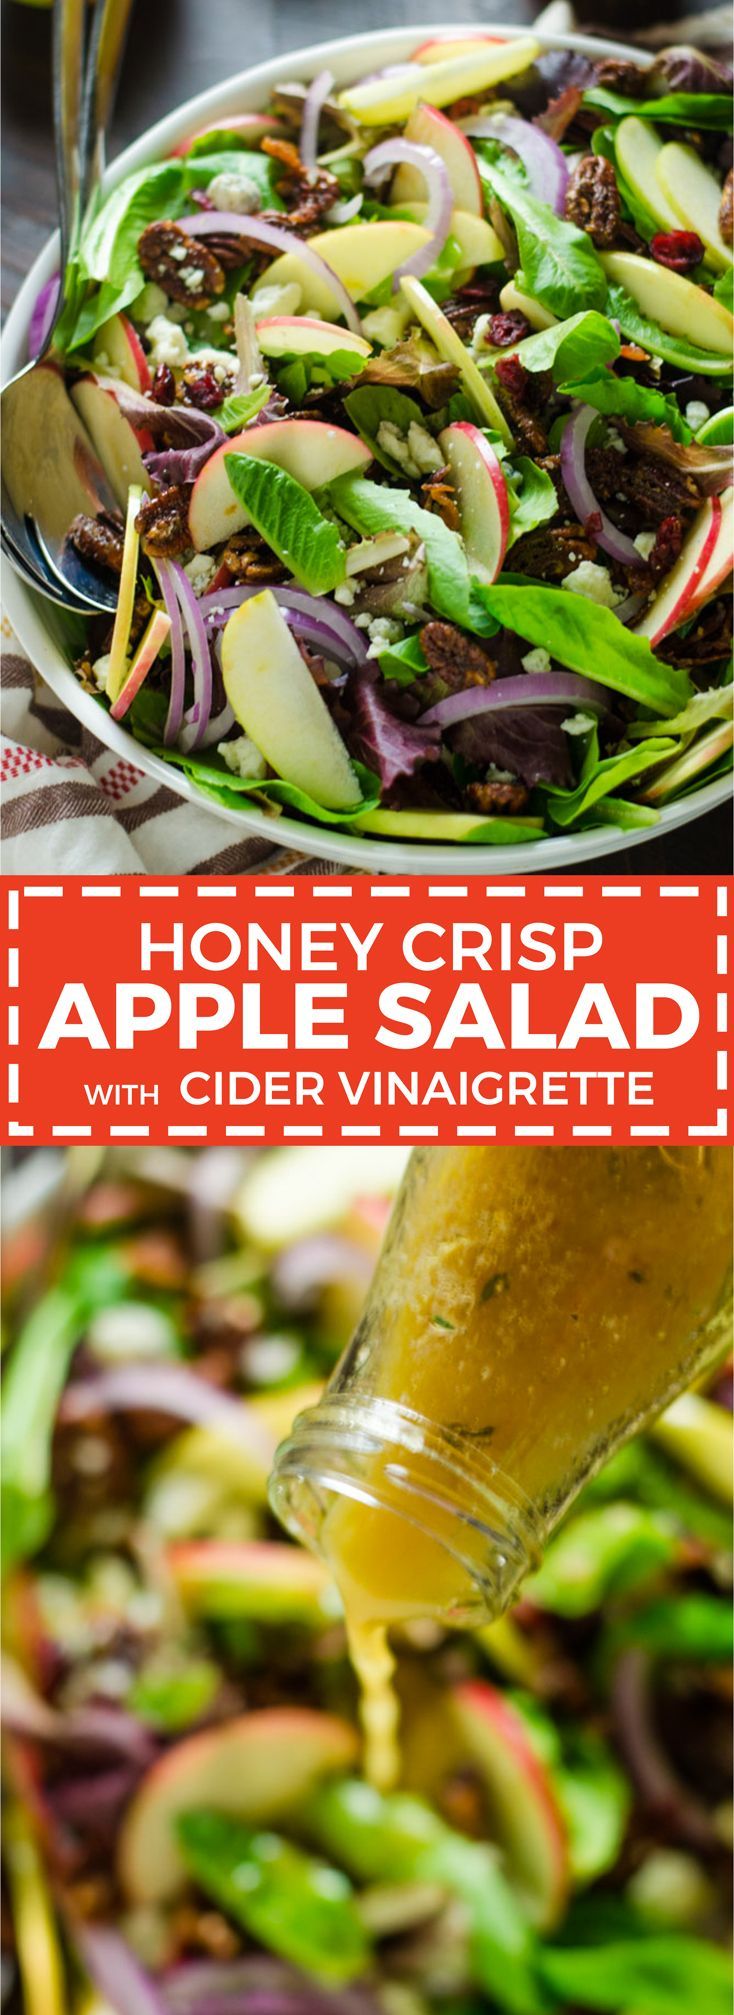 Honey Crisp Apple Salad with Cider Vinaigrette -   25 romaine salad recipes
 ideas